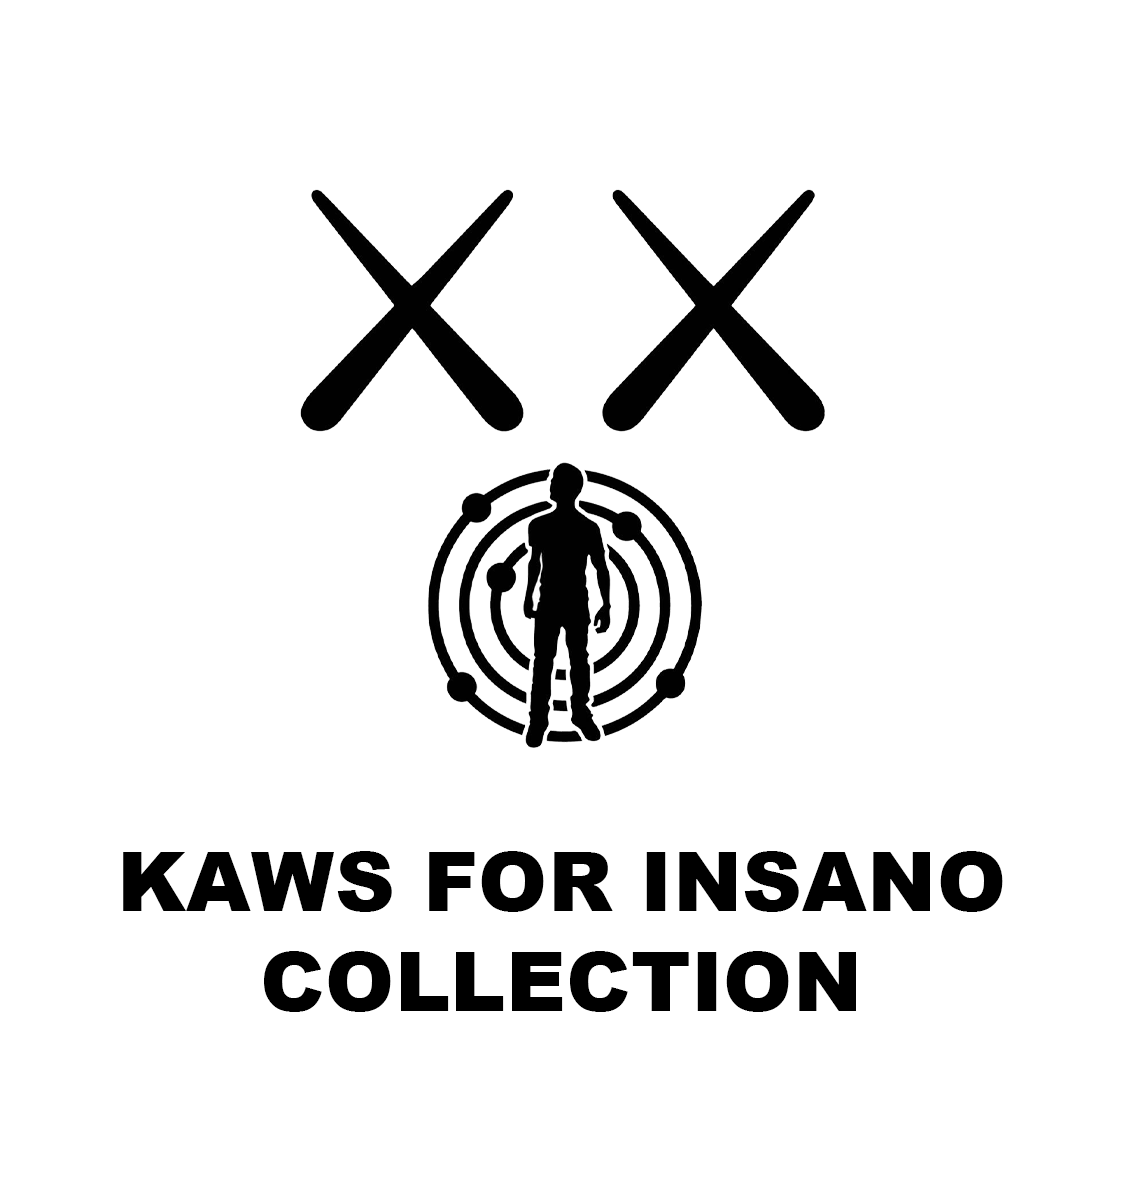 KAWS FOR INSANO COLLECTION